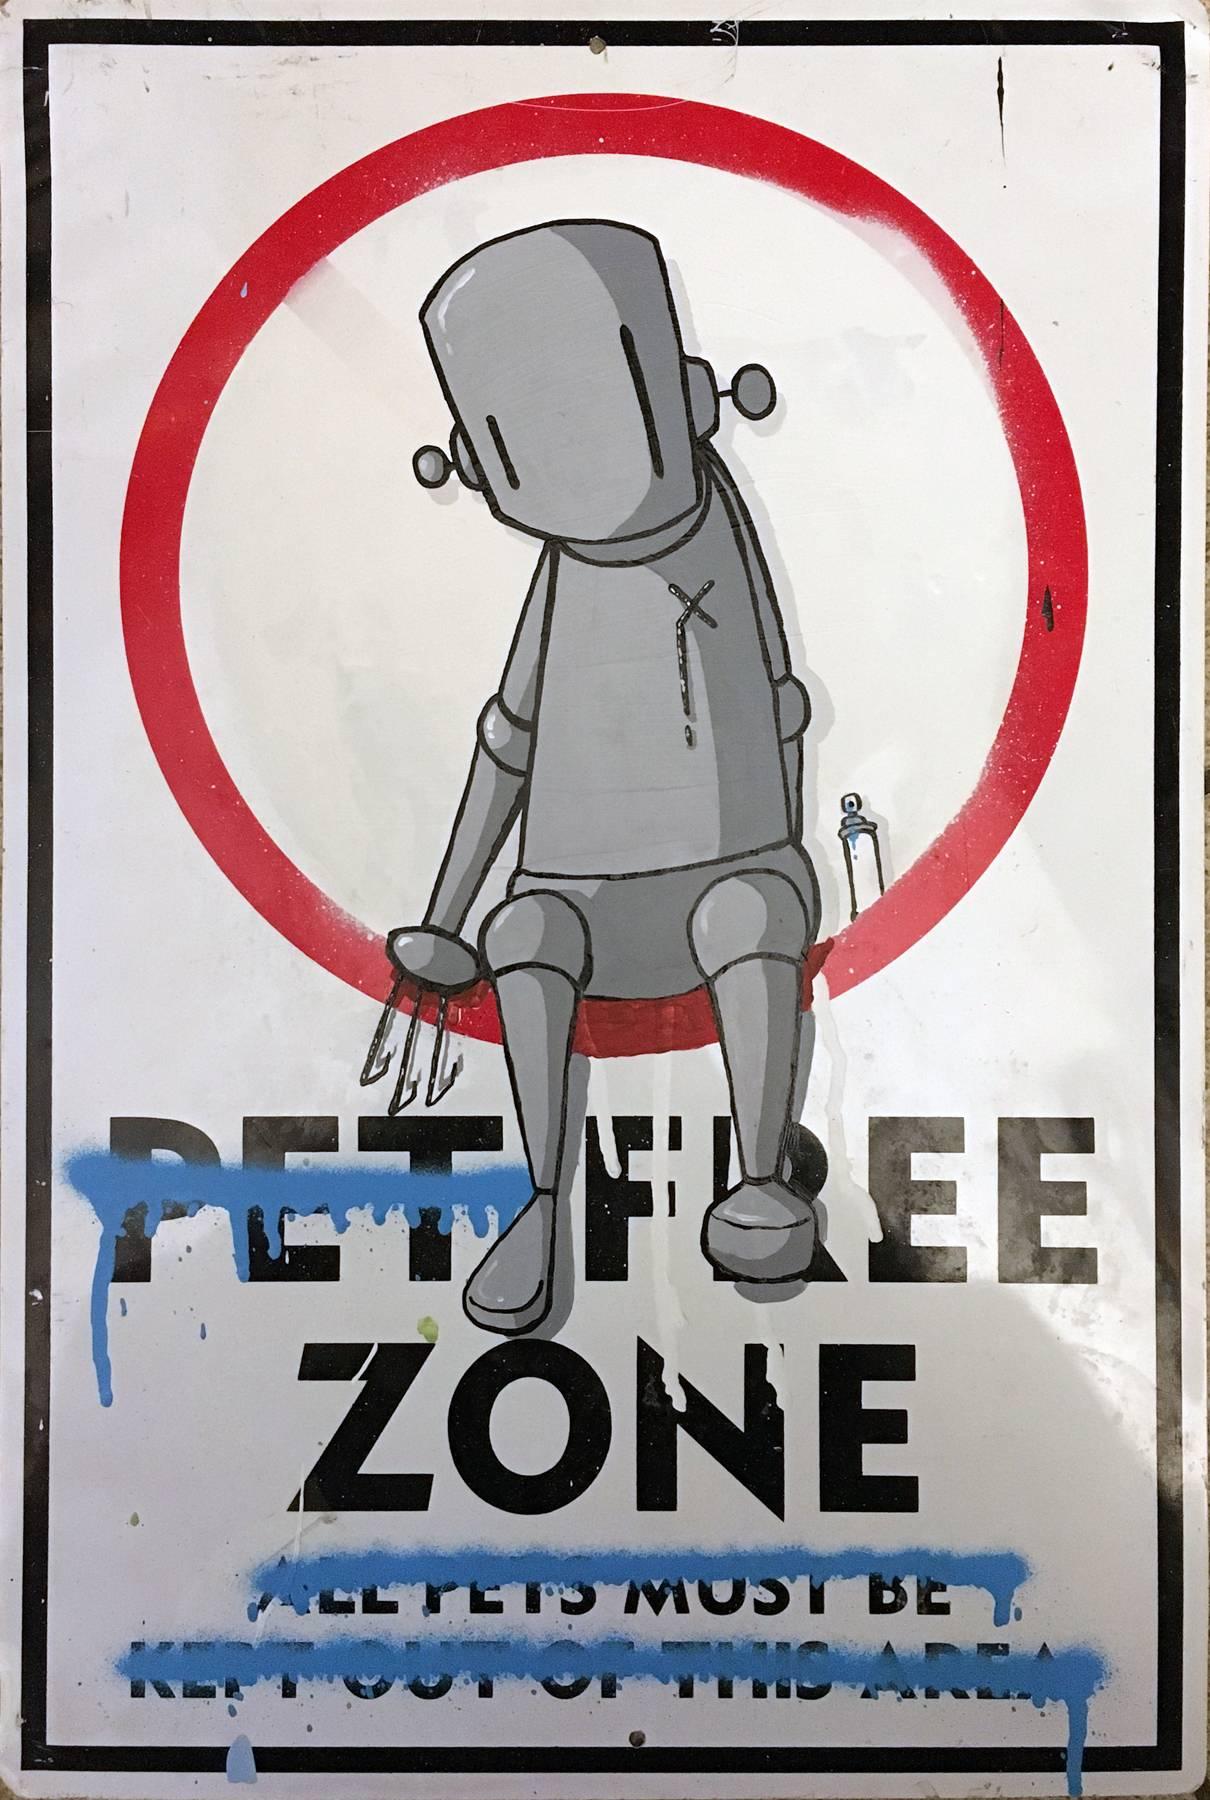 Free Zone - Mixed Media Art by Chris RWK